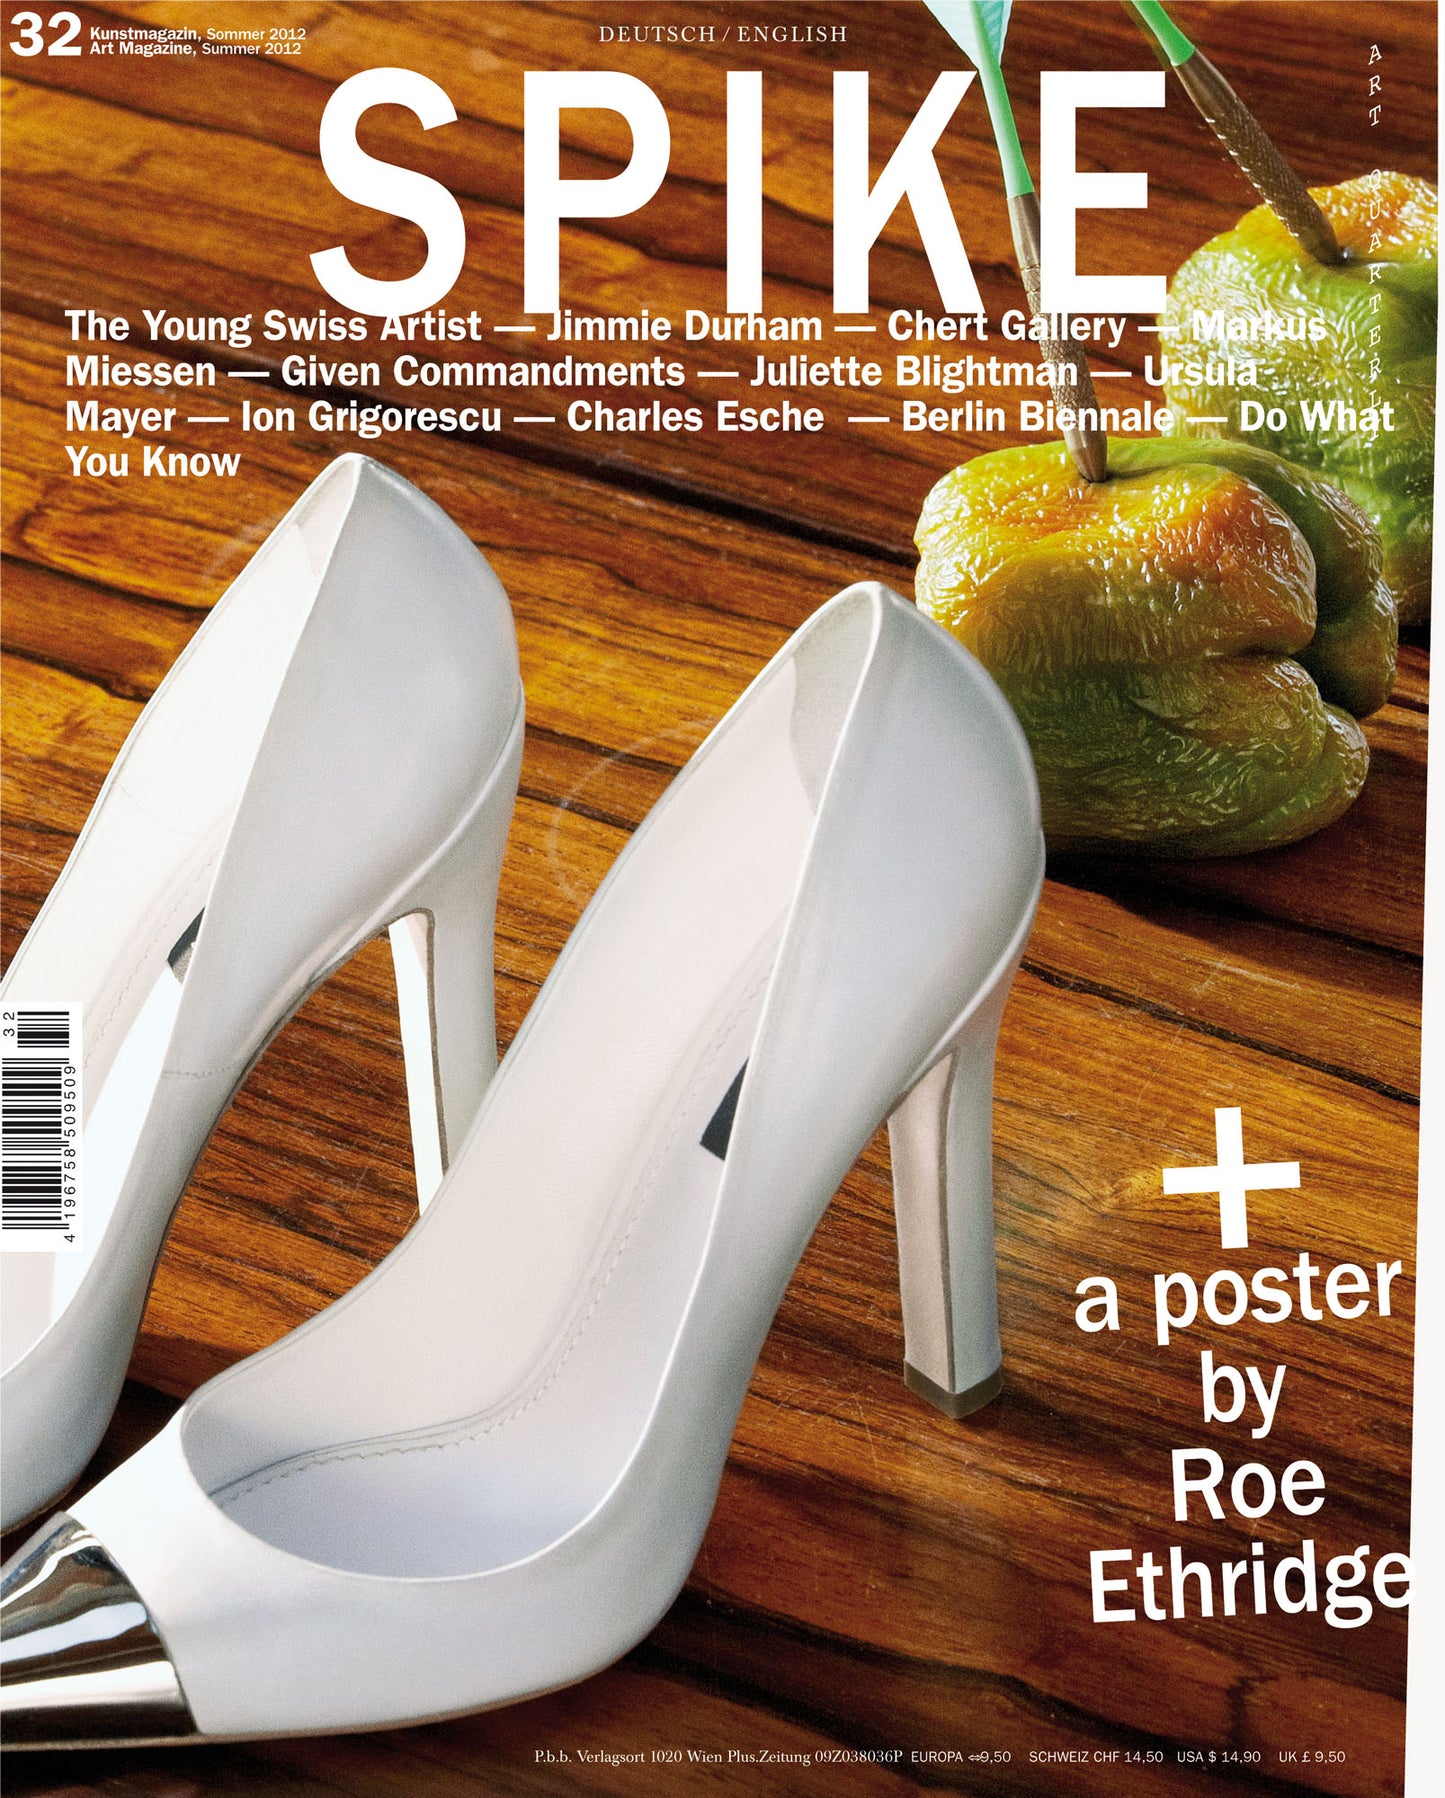 ISSUE 32 (SUMMER 2012)